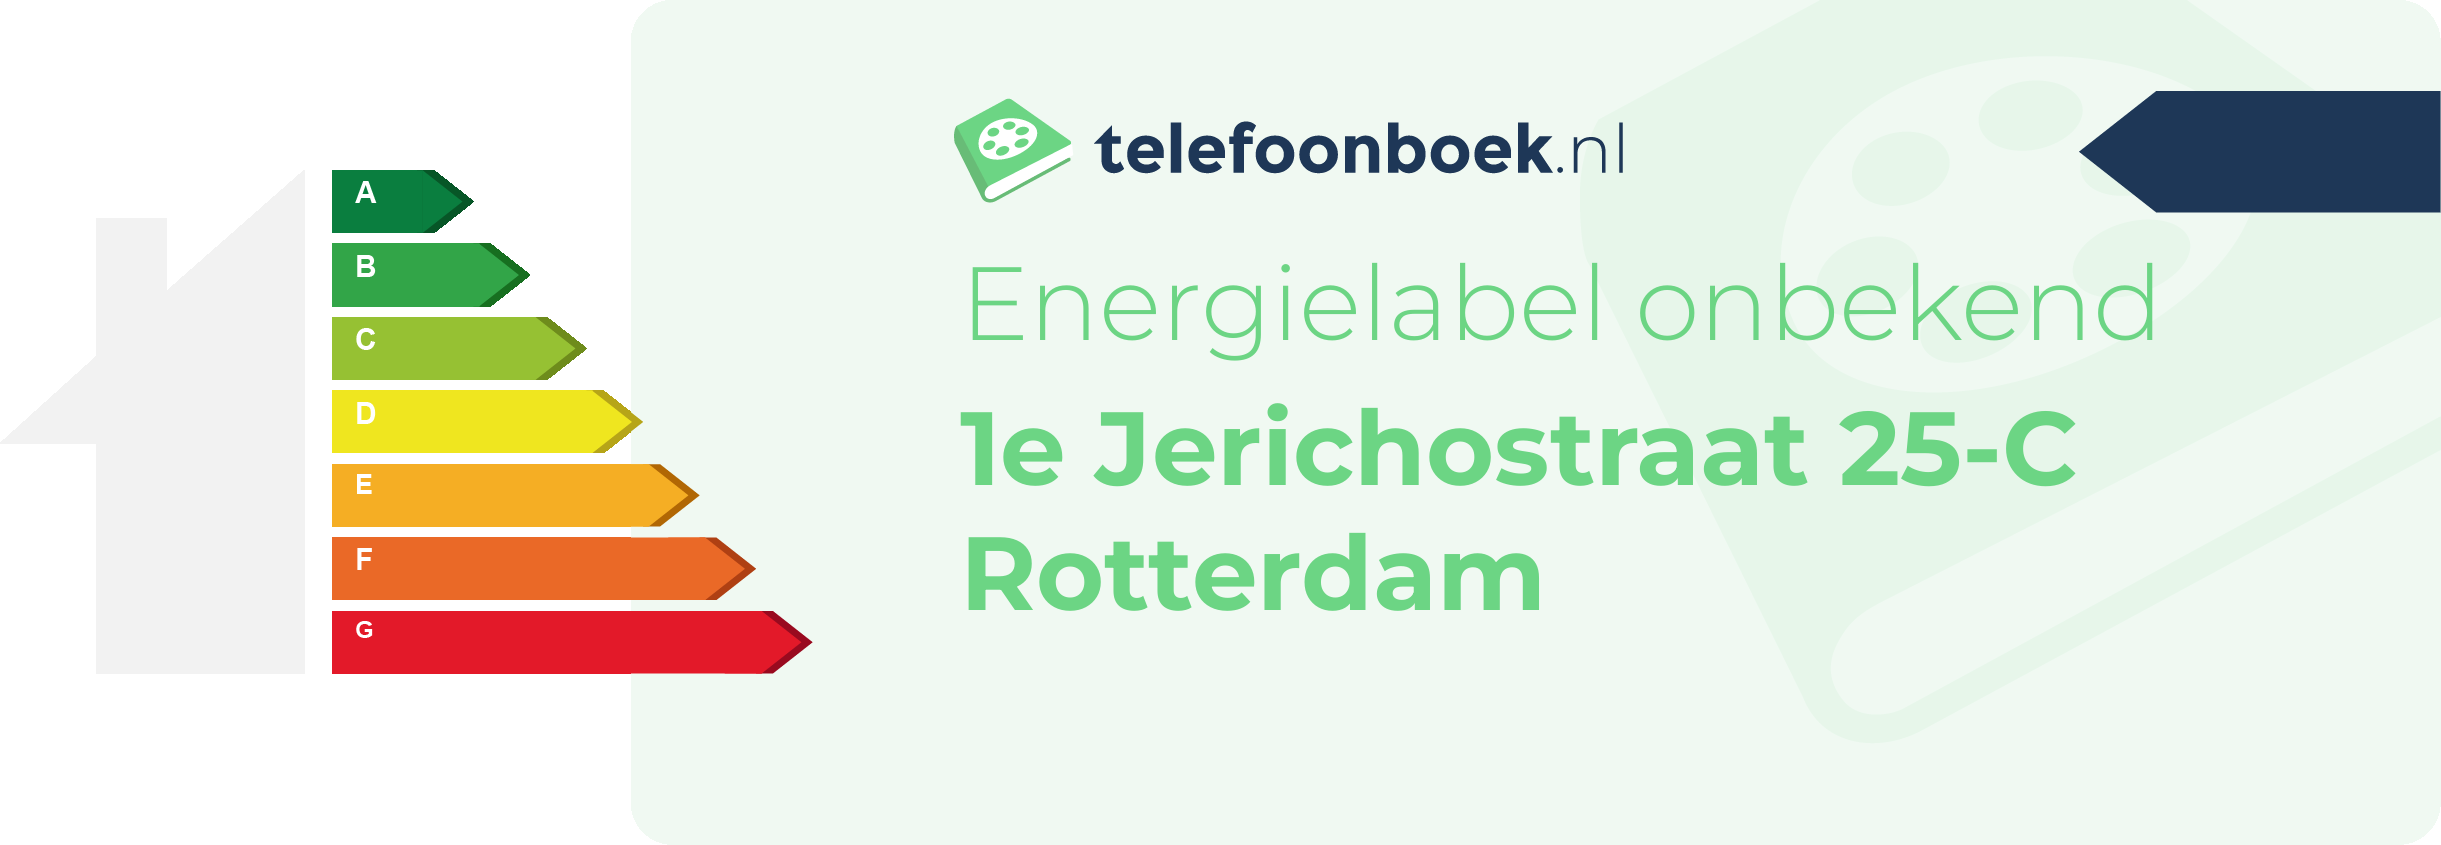 Energielabel 1e Jerichostraat 25-C Rotterdam